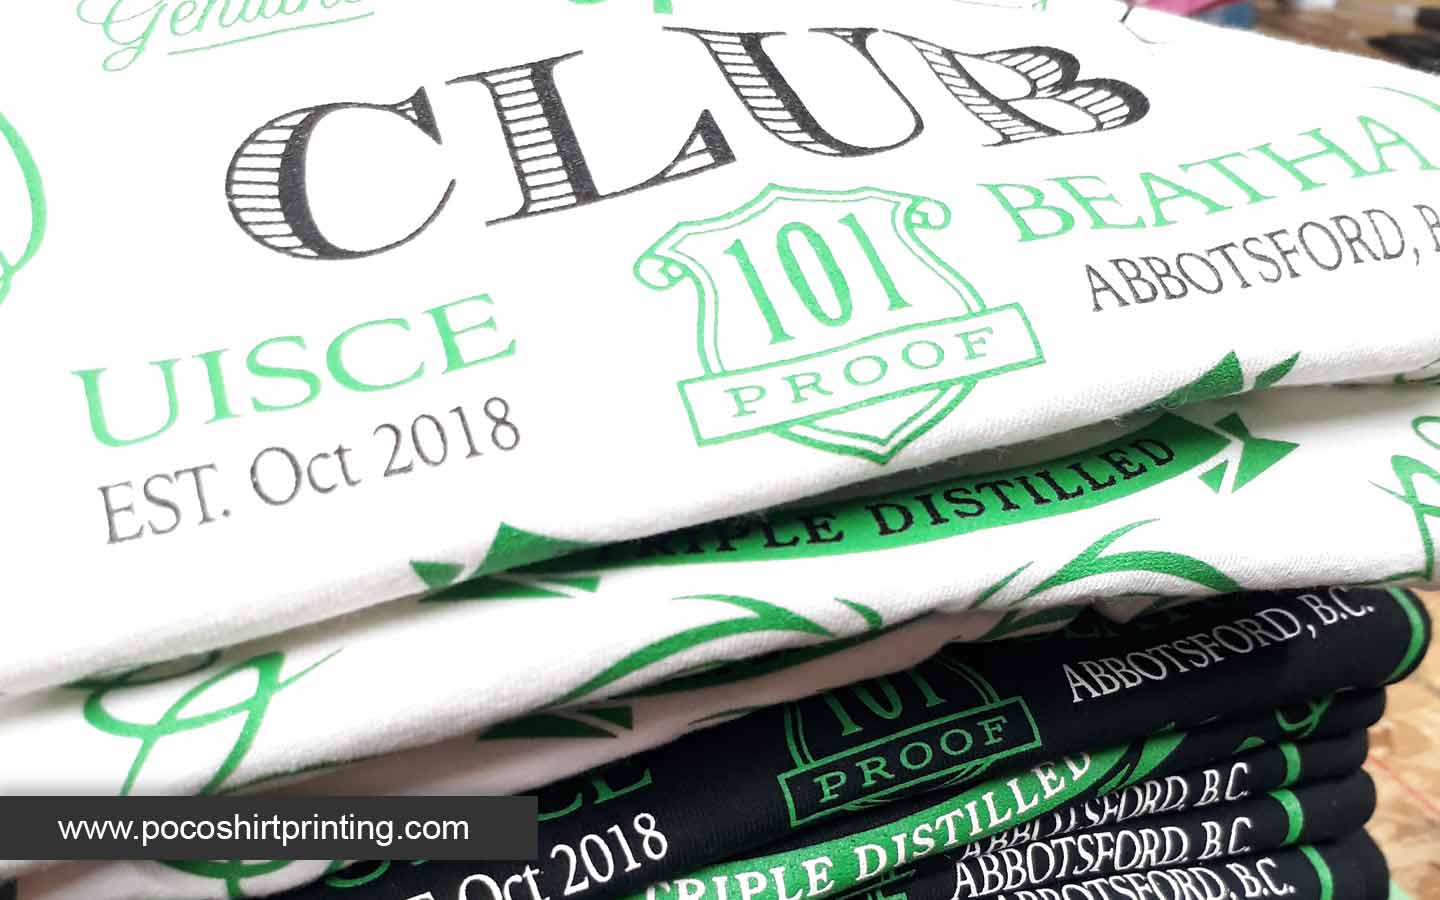 screen printed t-shirt for a club